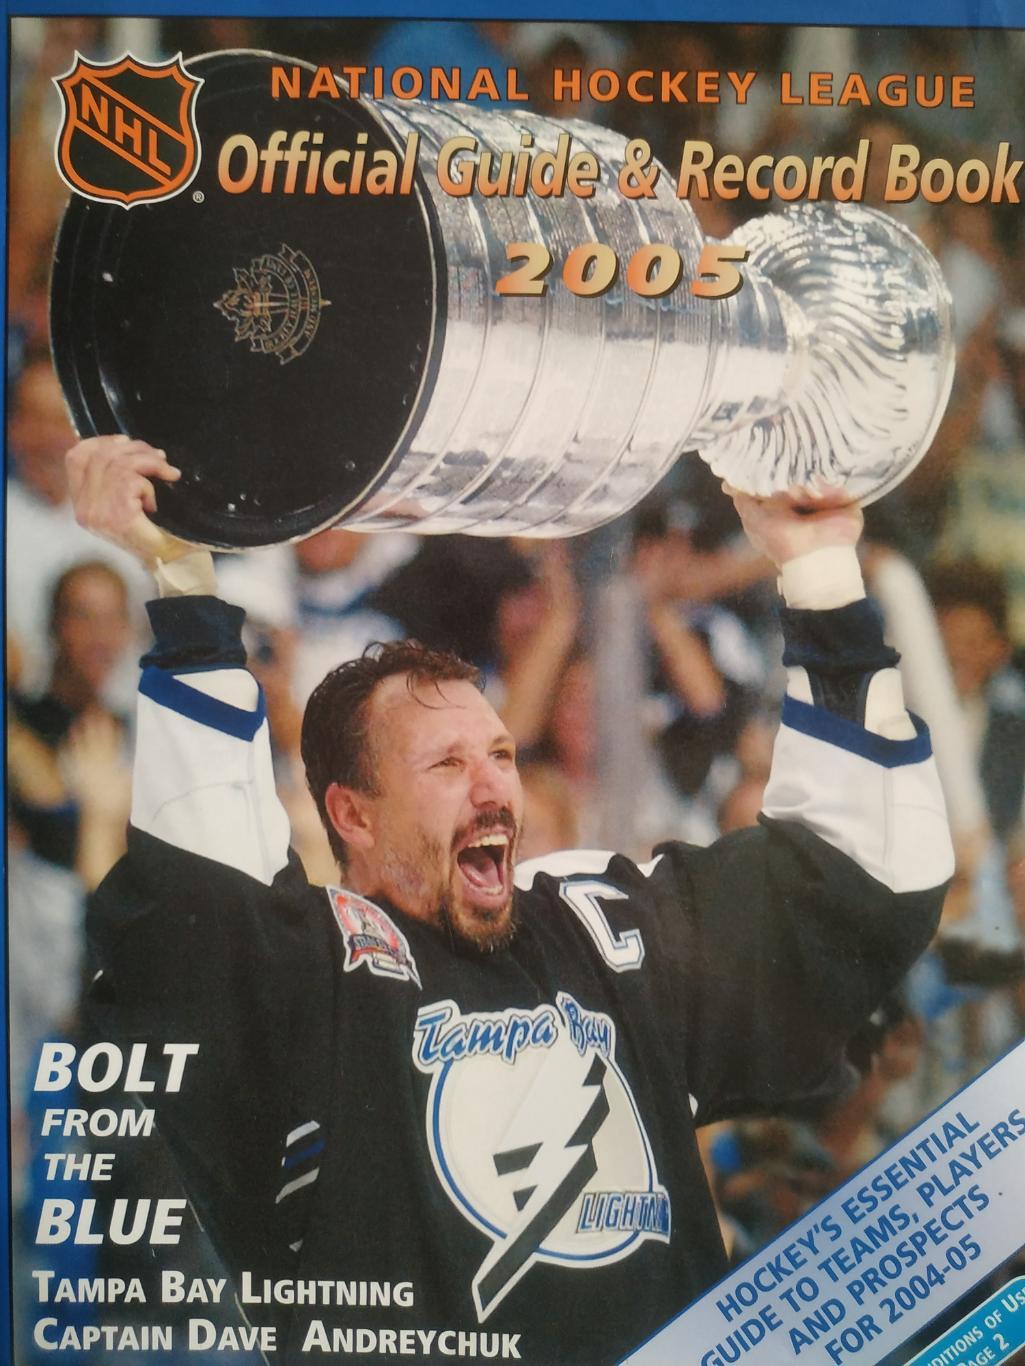 ХОККЕЙ ОФИЦИАЛЬНЫЙ СПРАВОЧНИК НХЛ 2005 NHL OFFICIAL GUIDE AND RECORD BOOK